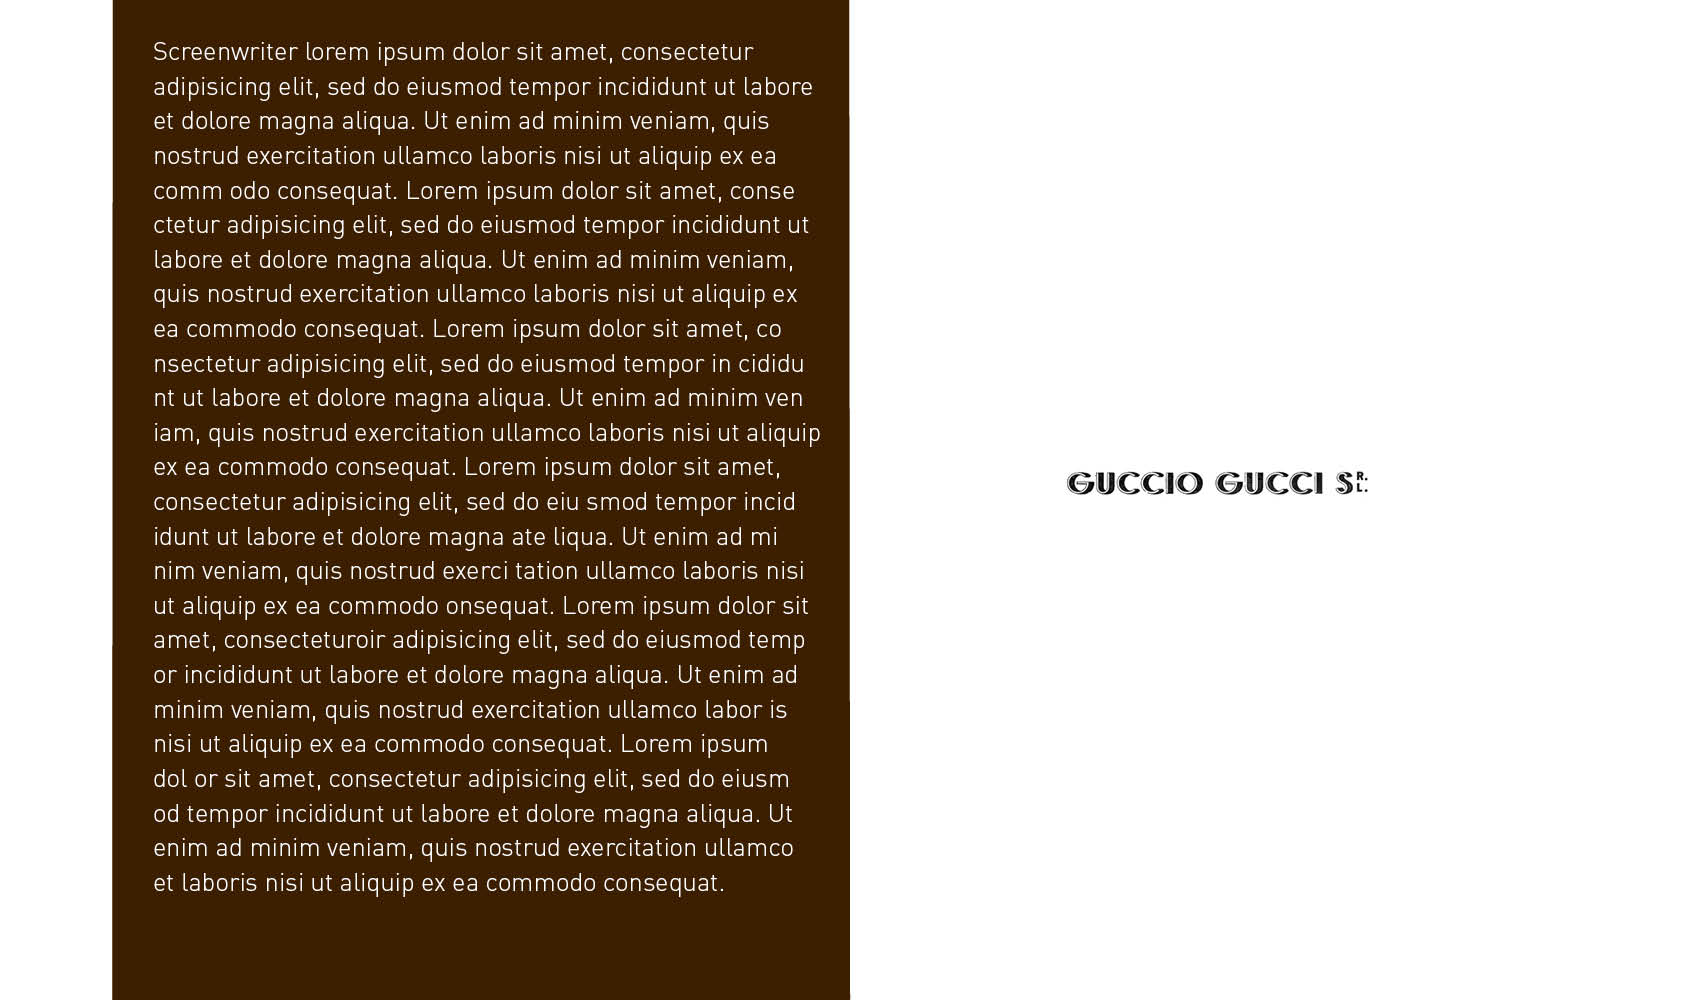 Publications__Gucci Icon__7.jpg